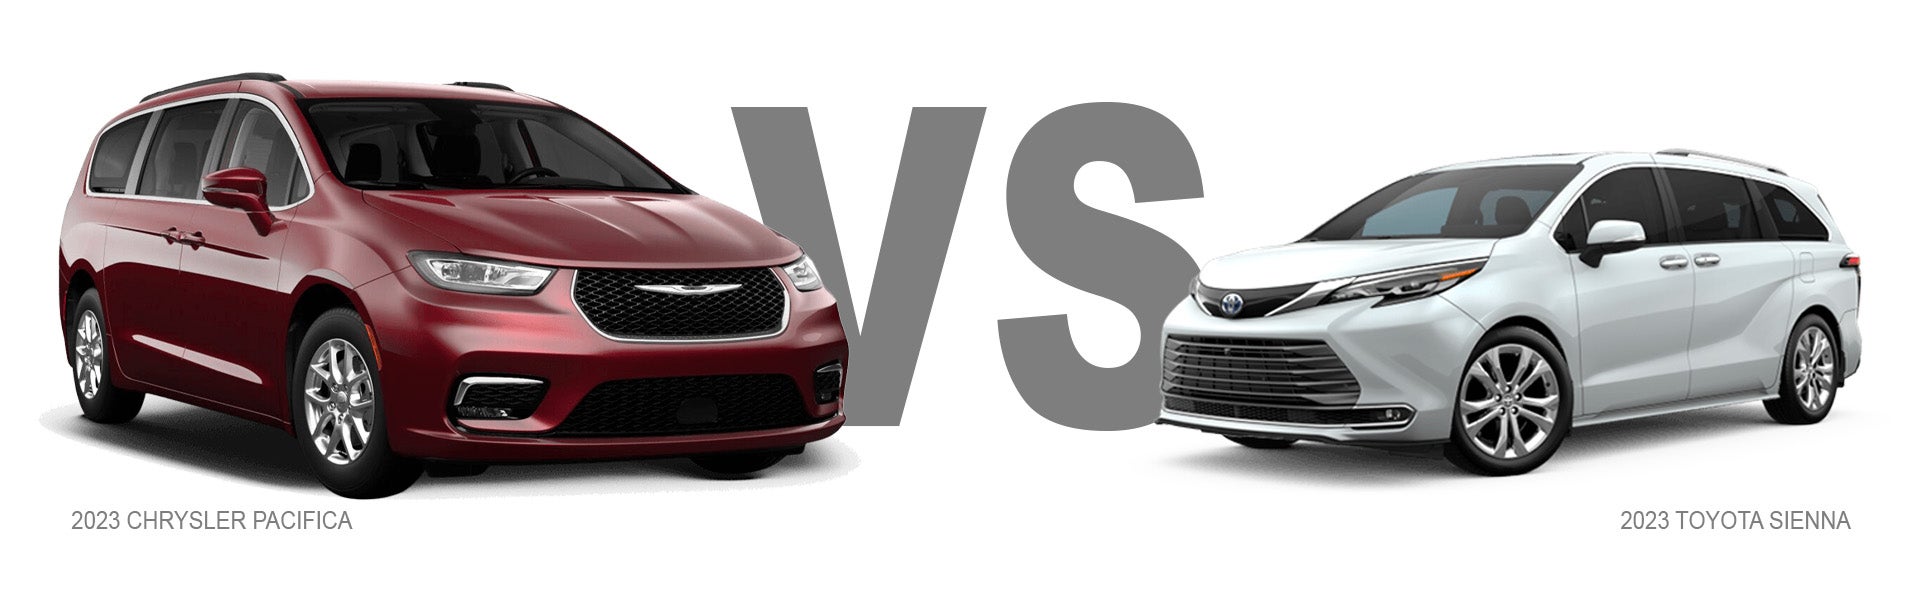 2023 Chrysler Pacifica versus Toyota Sienna